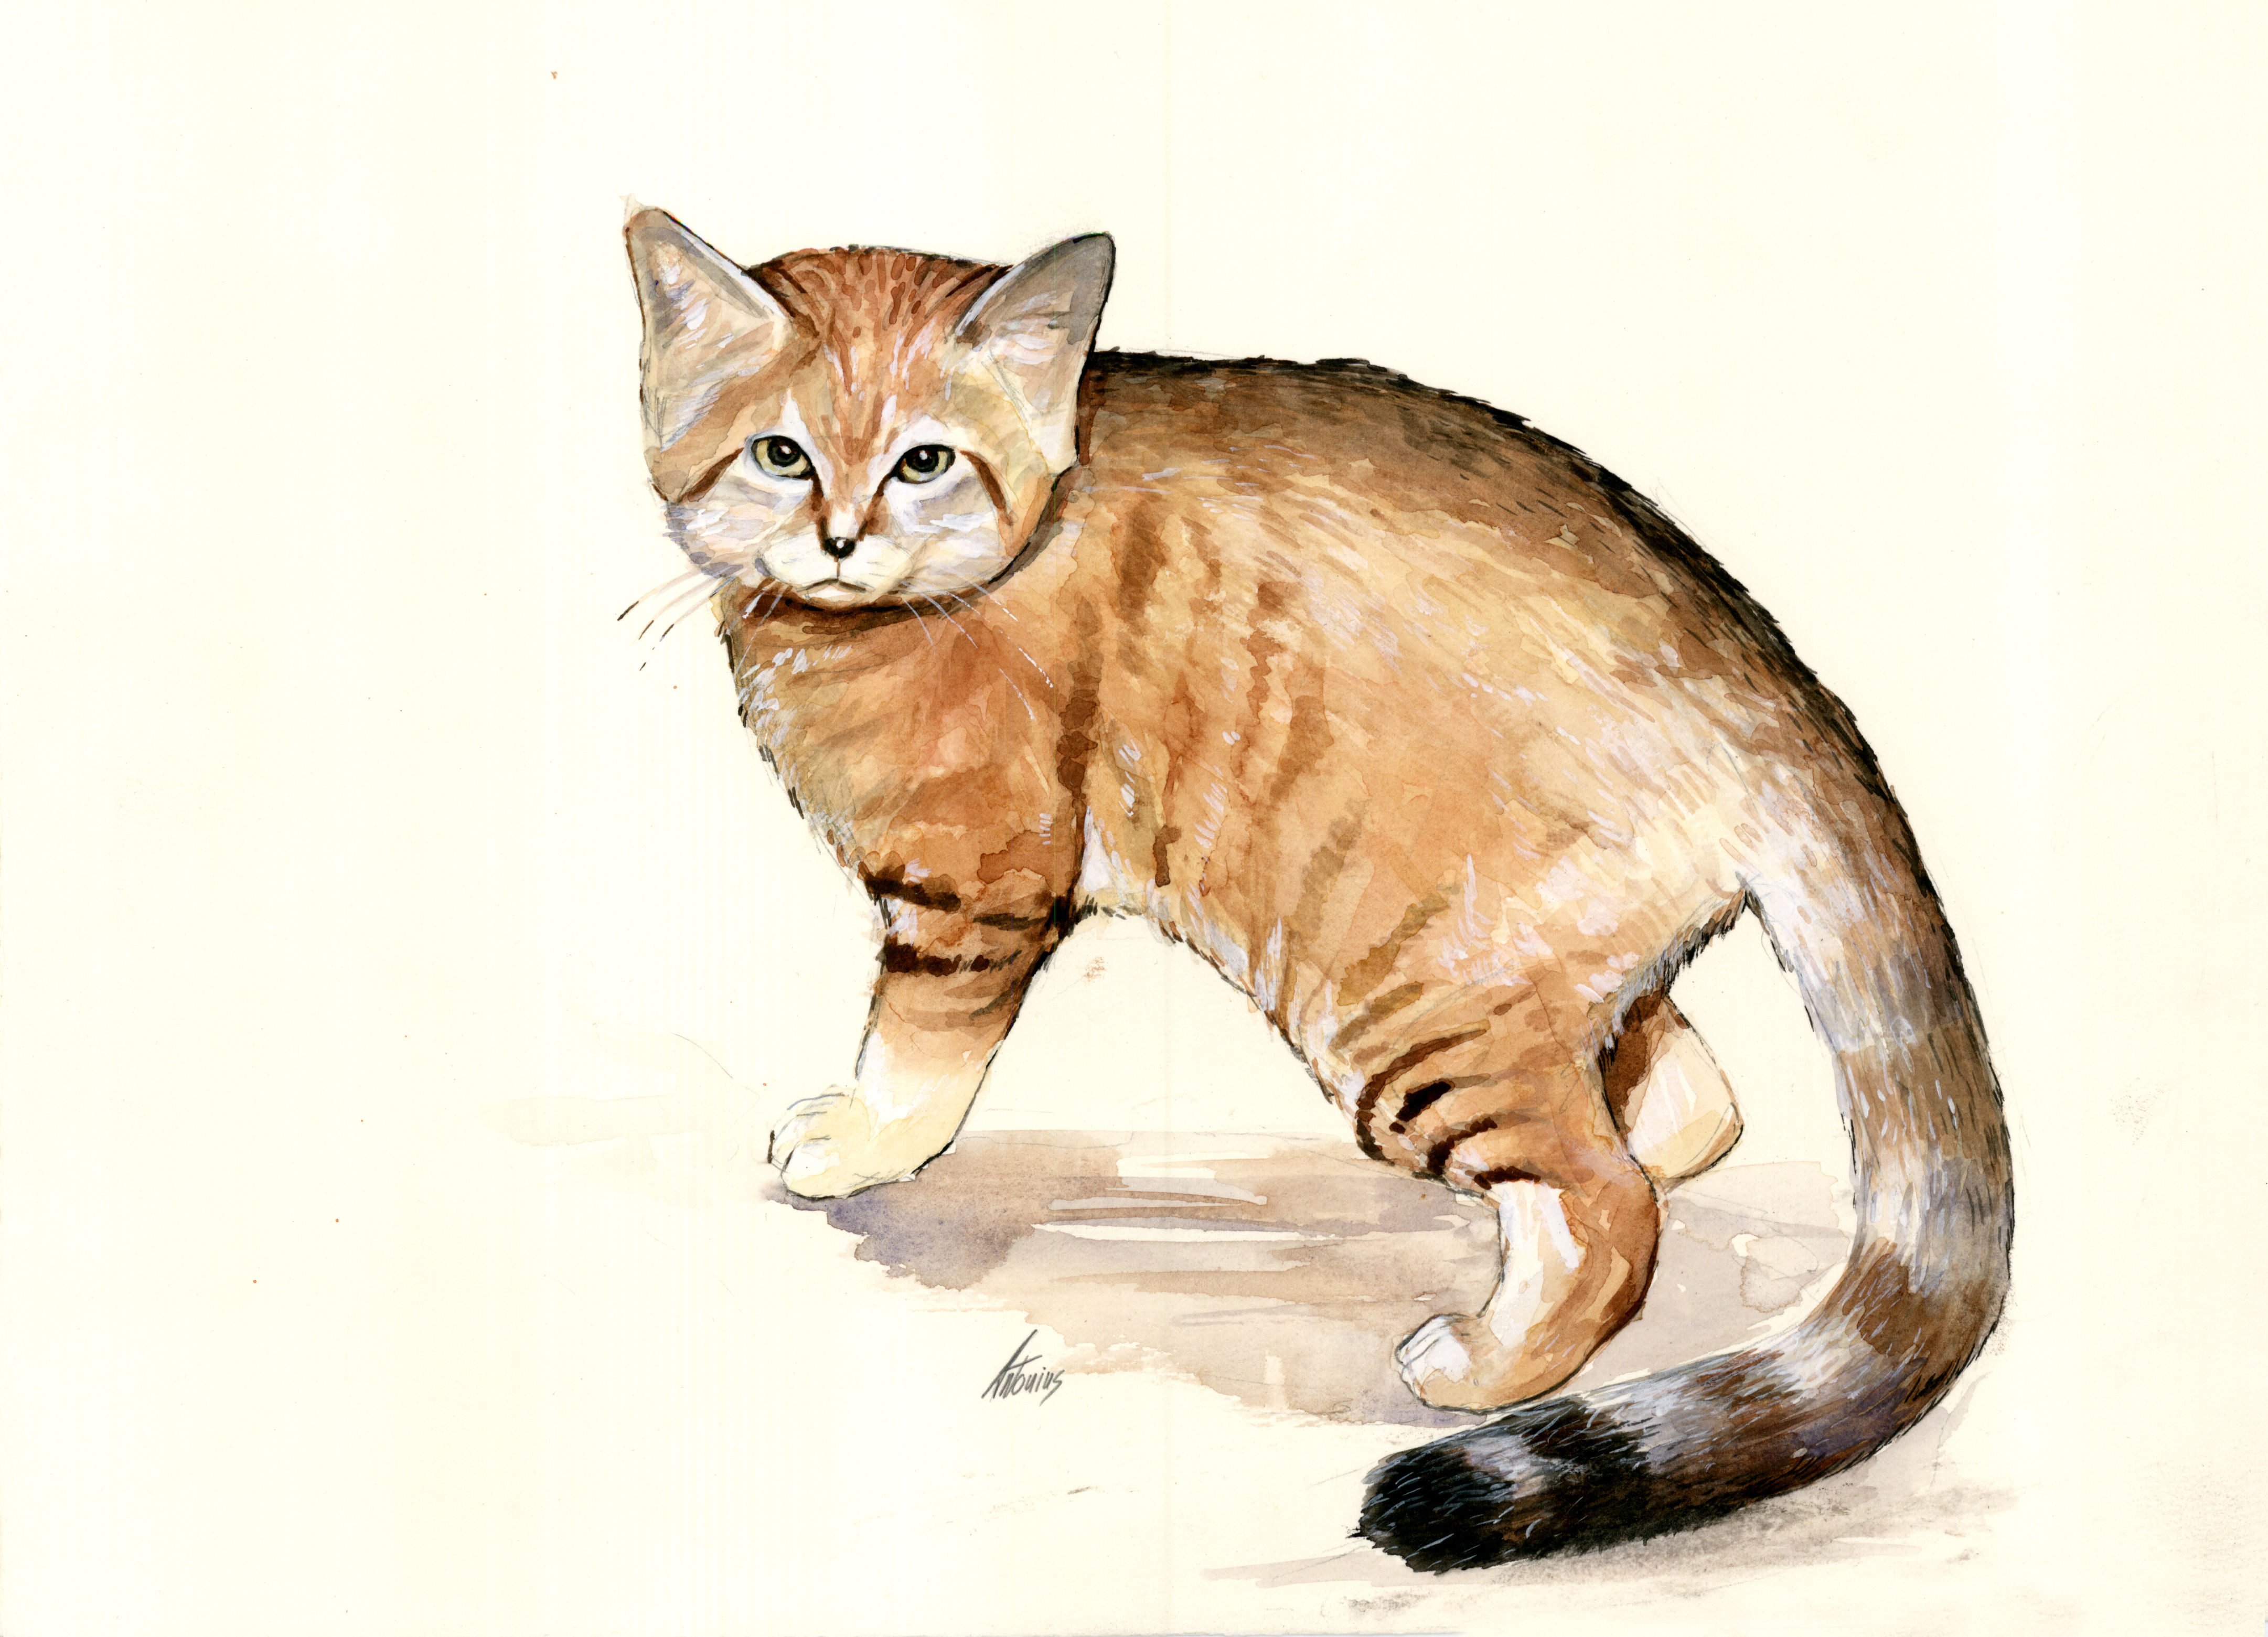 Image of Sand Cat